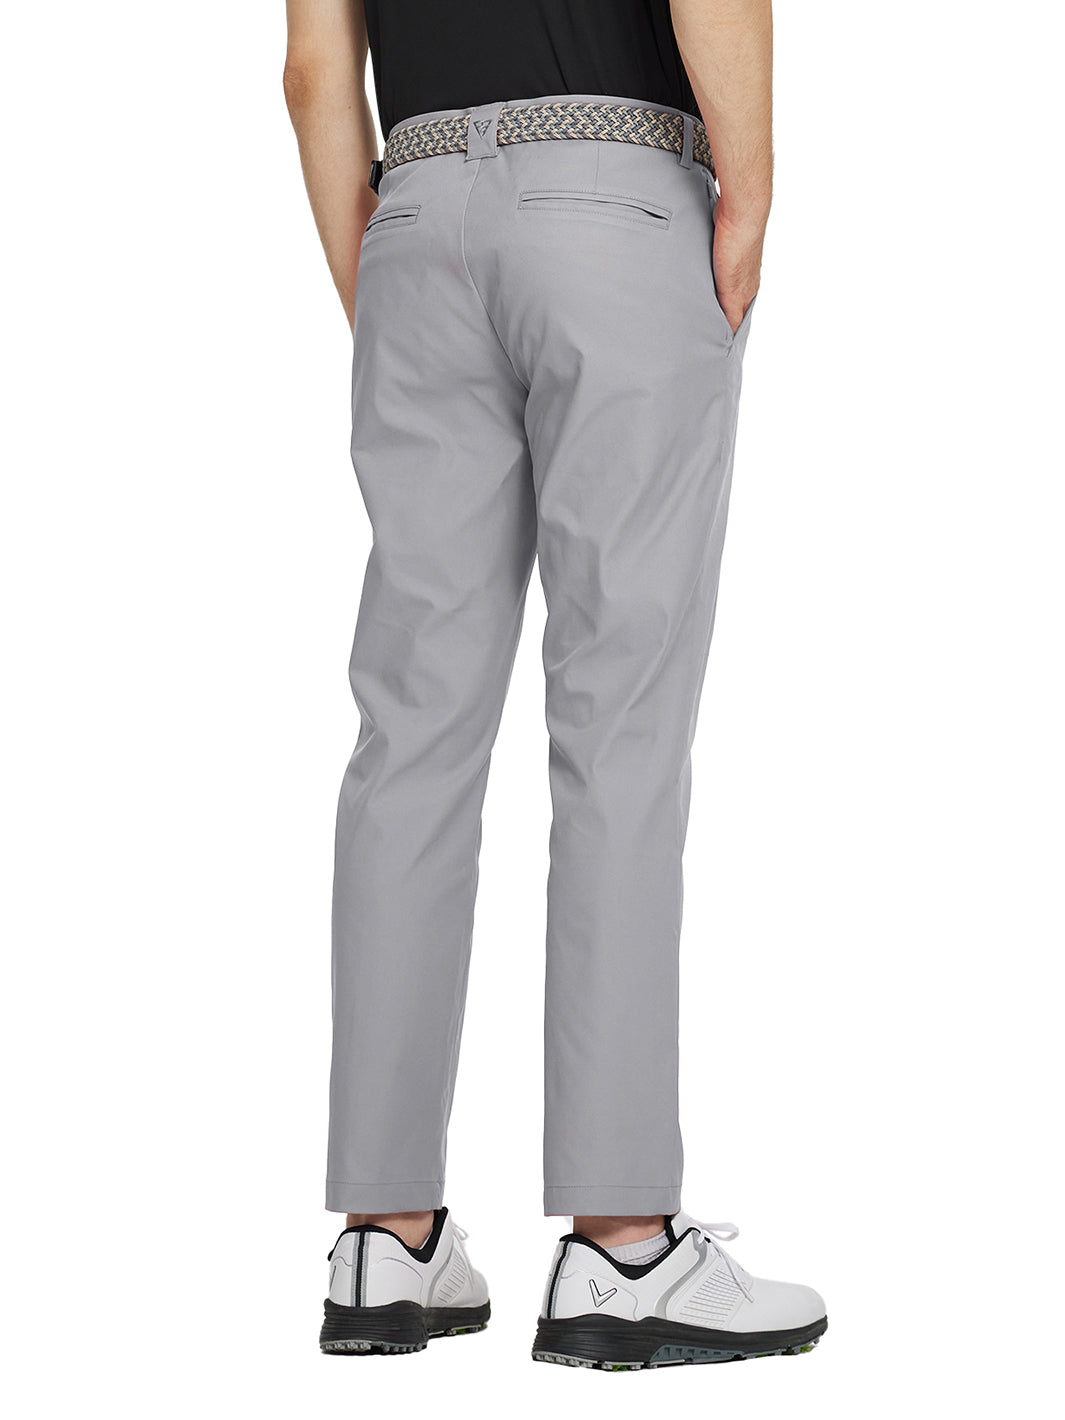 Men's Performance Golf Pants-Glacier Grey